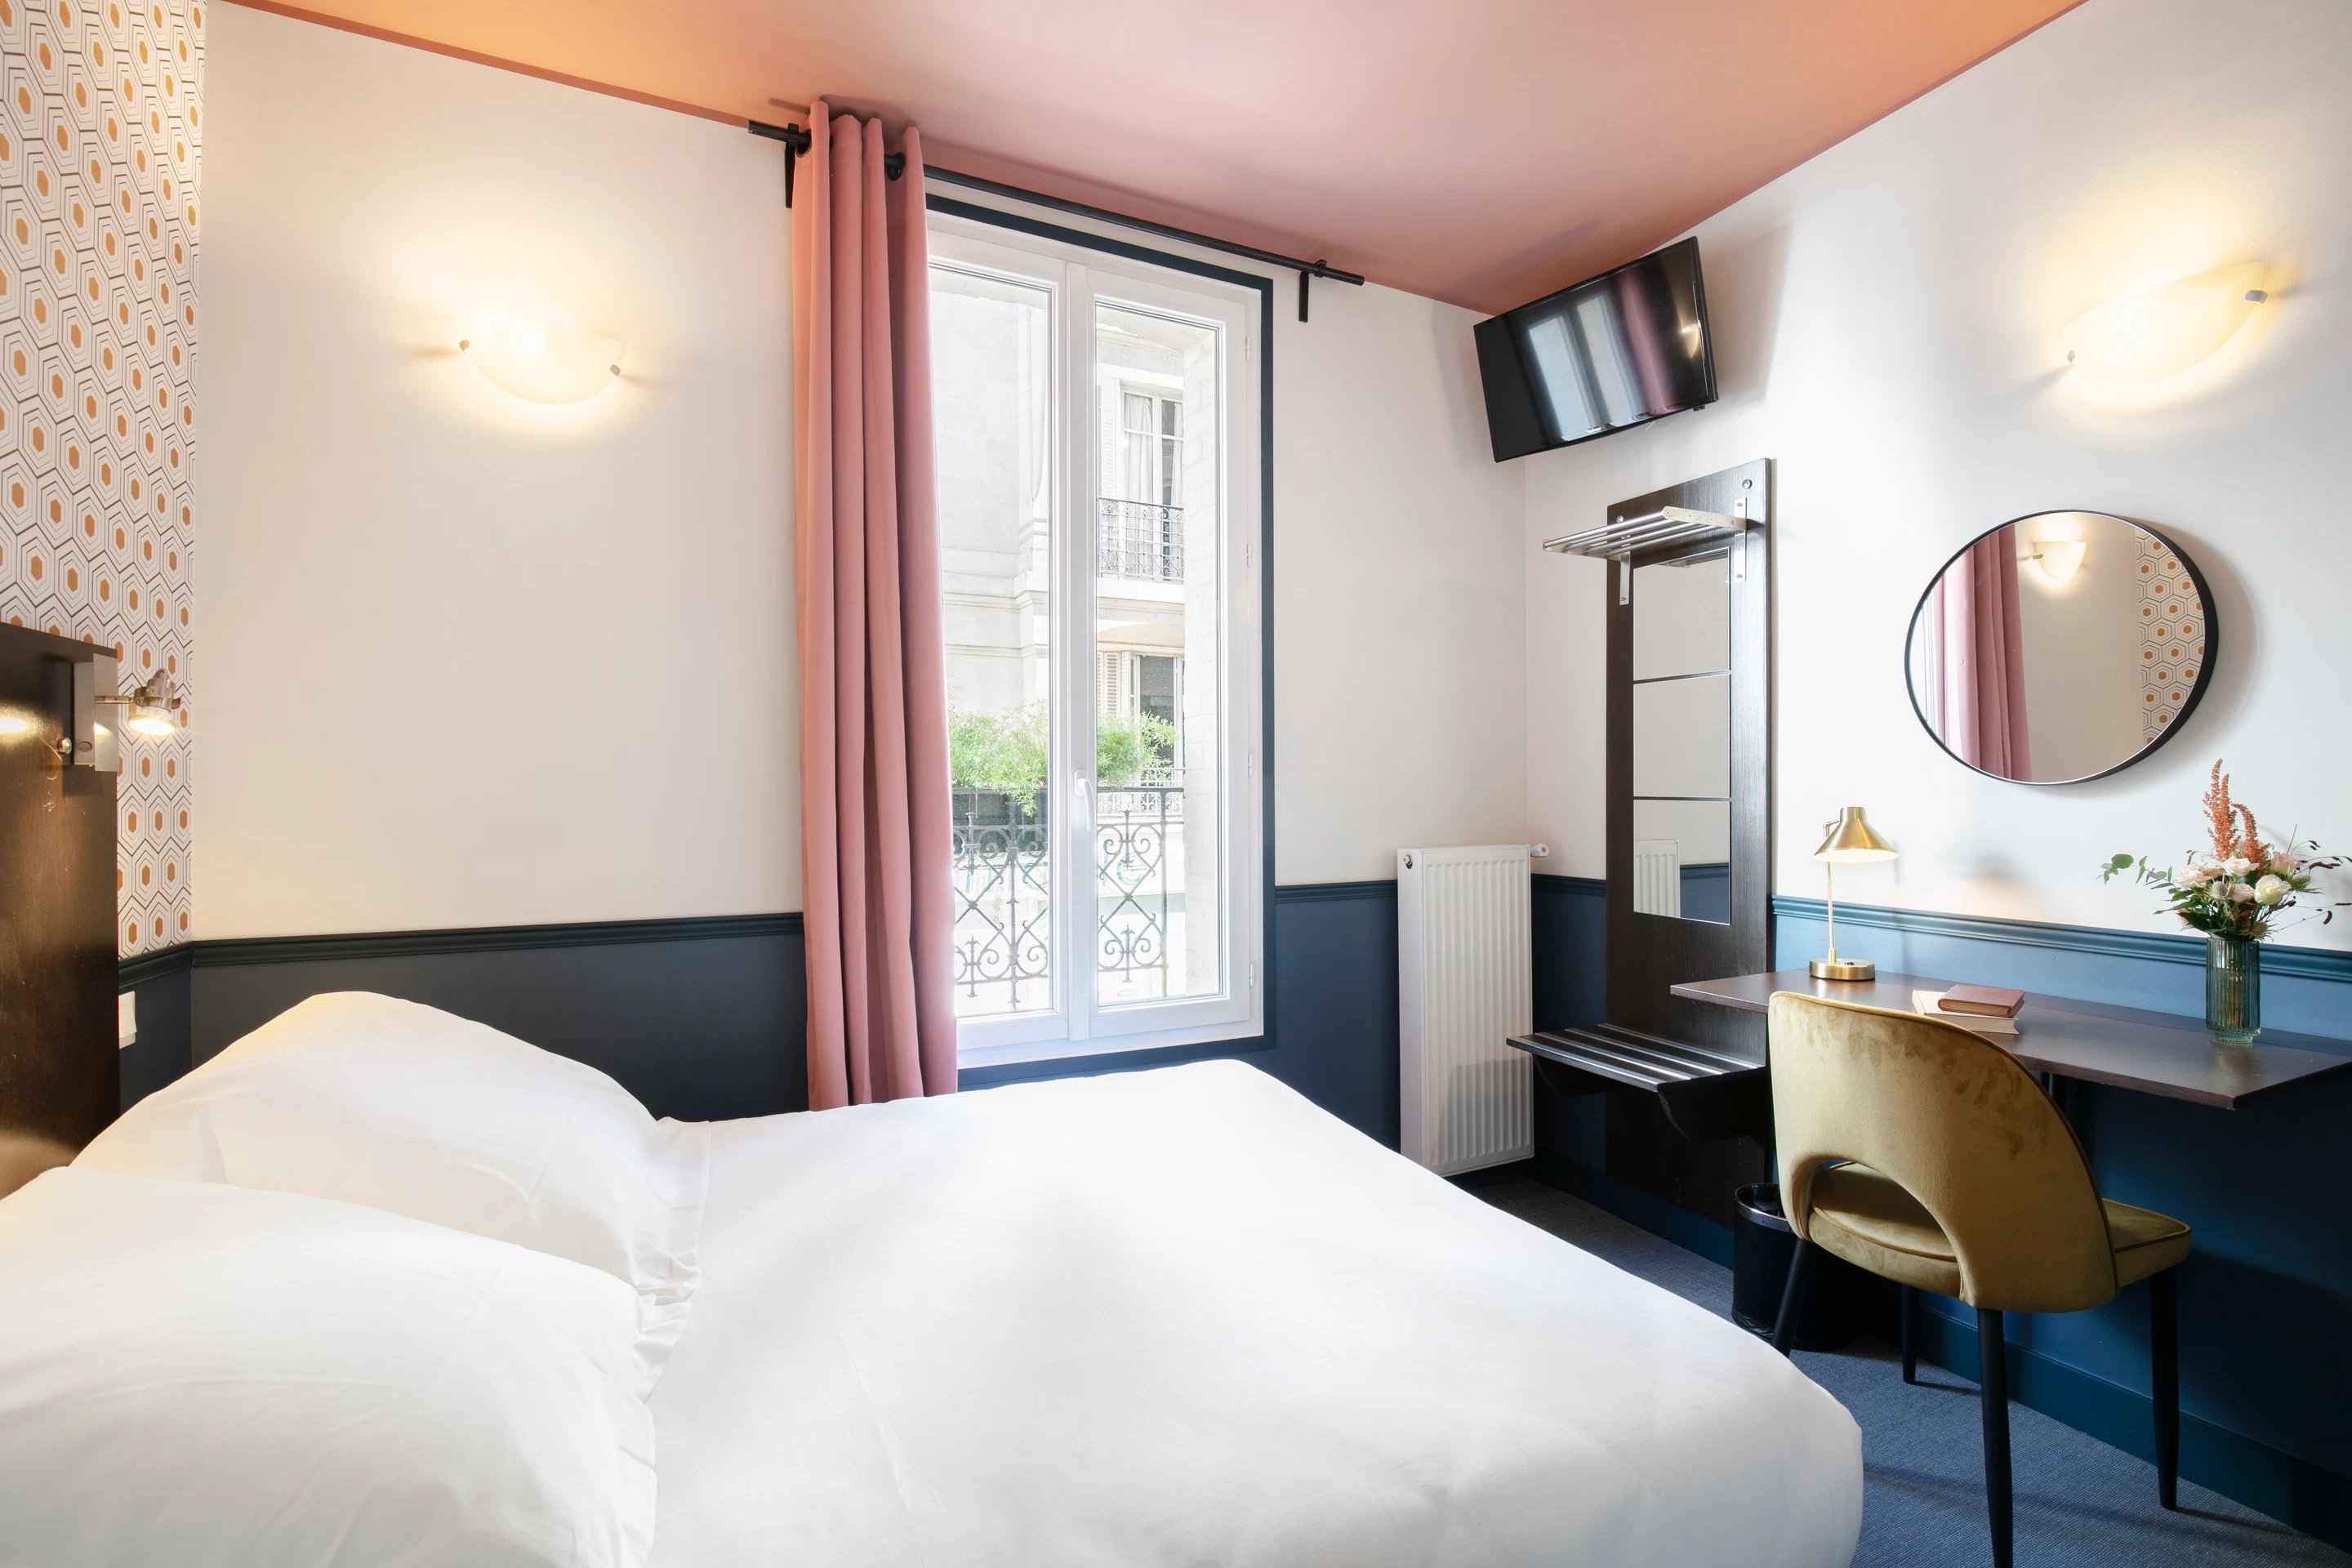 186/BOISSIERE/Hotel_Boissiere_-_Paris_-_15_-_HD.jpg